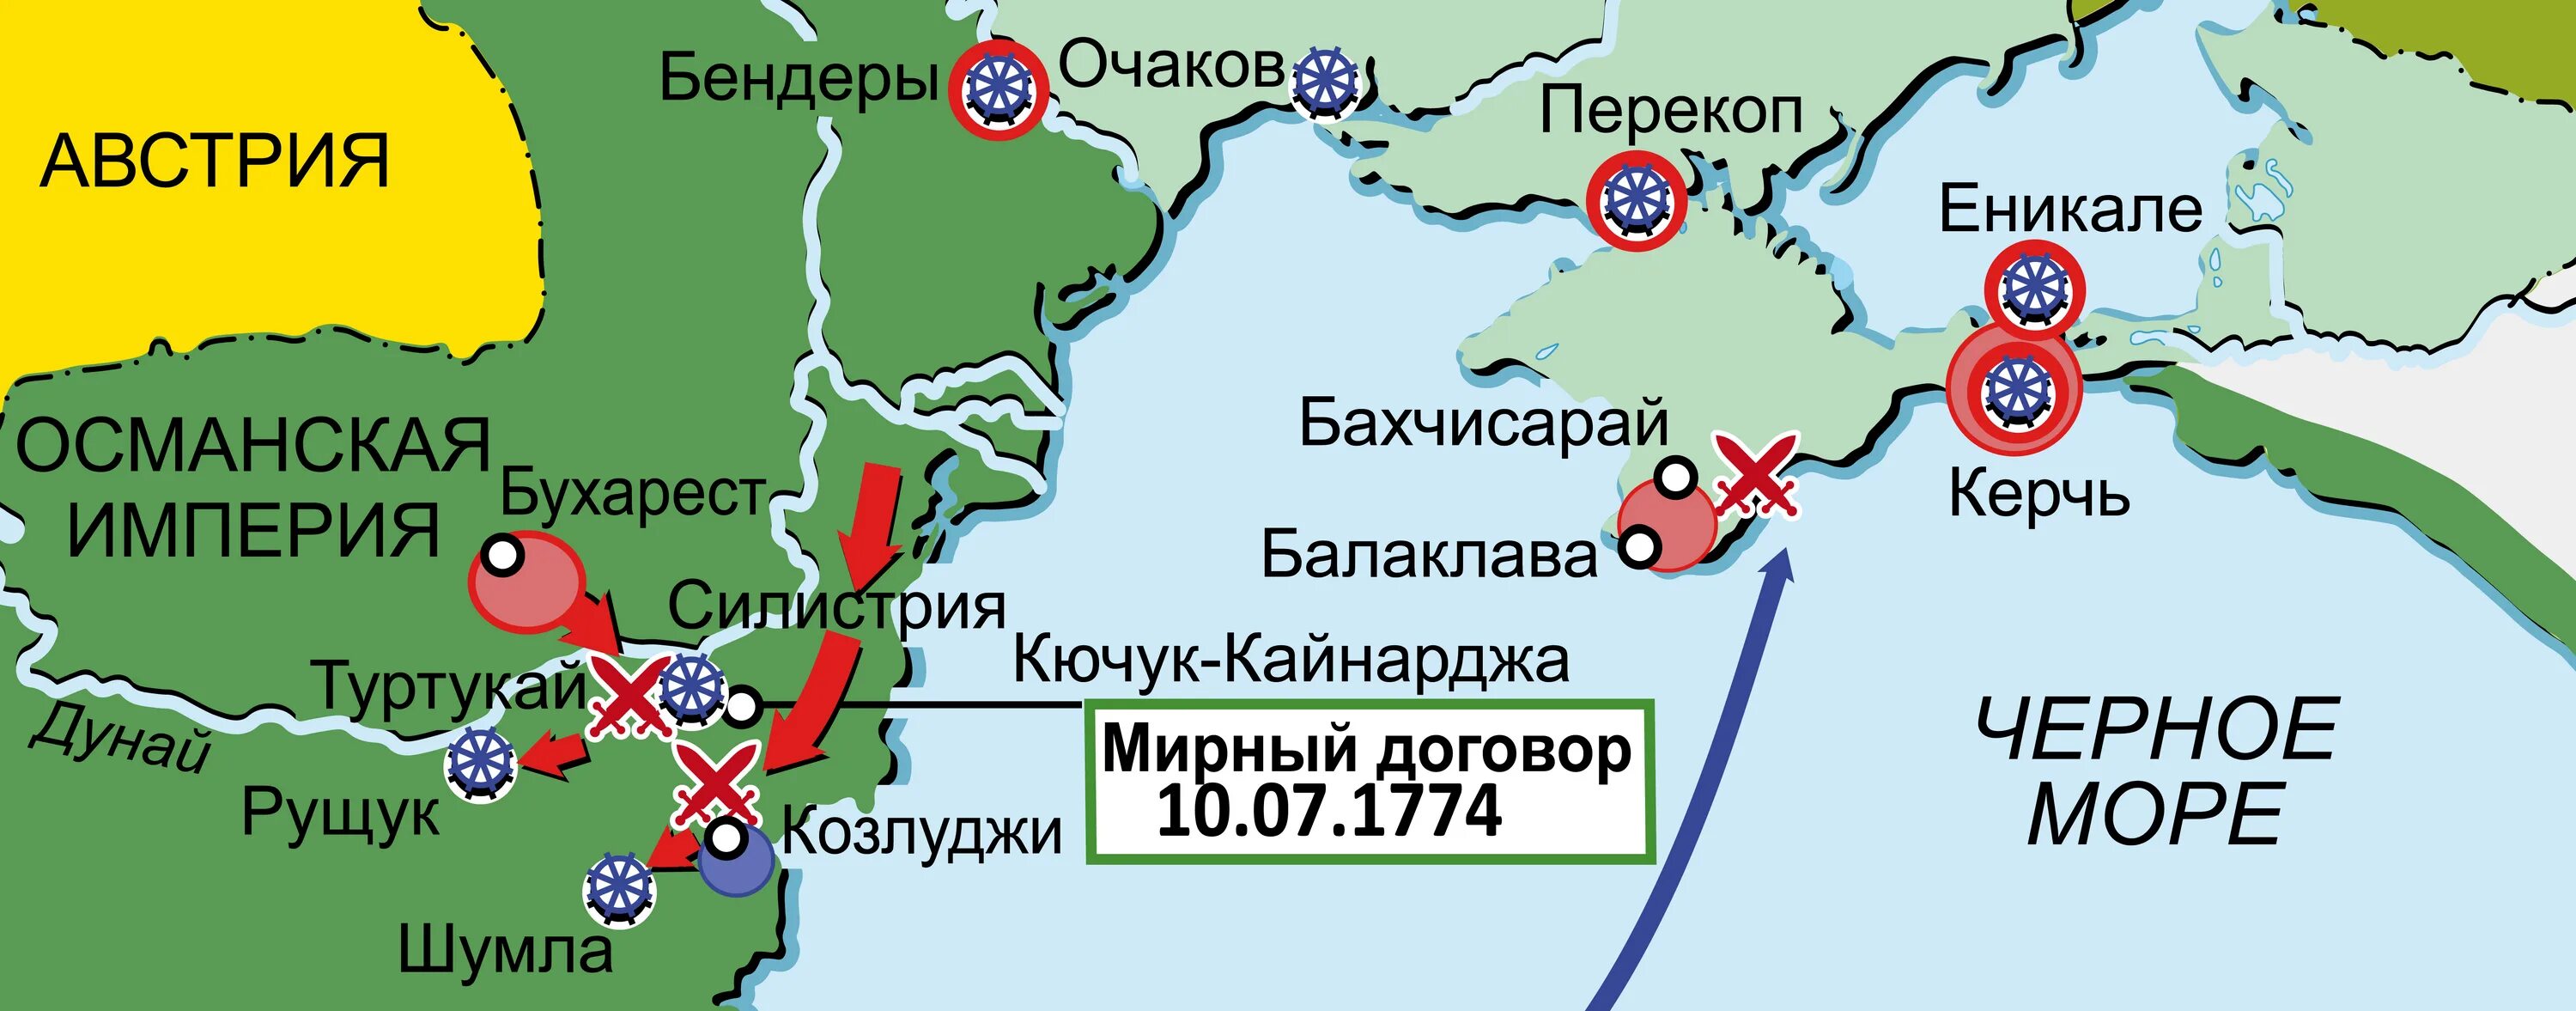 Очаков на карте Украины. Порт Очаков на карте. Очаков город на карте.